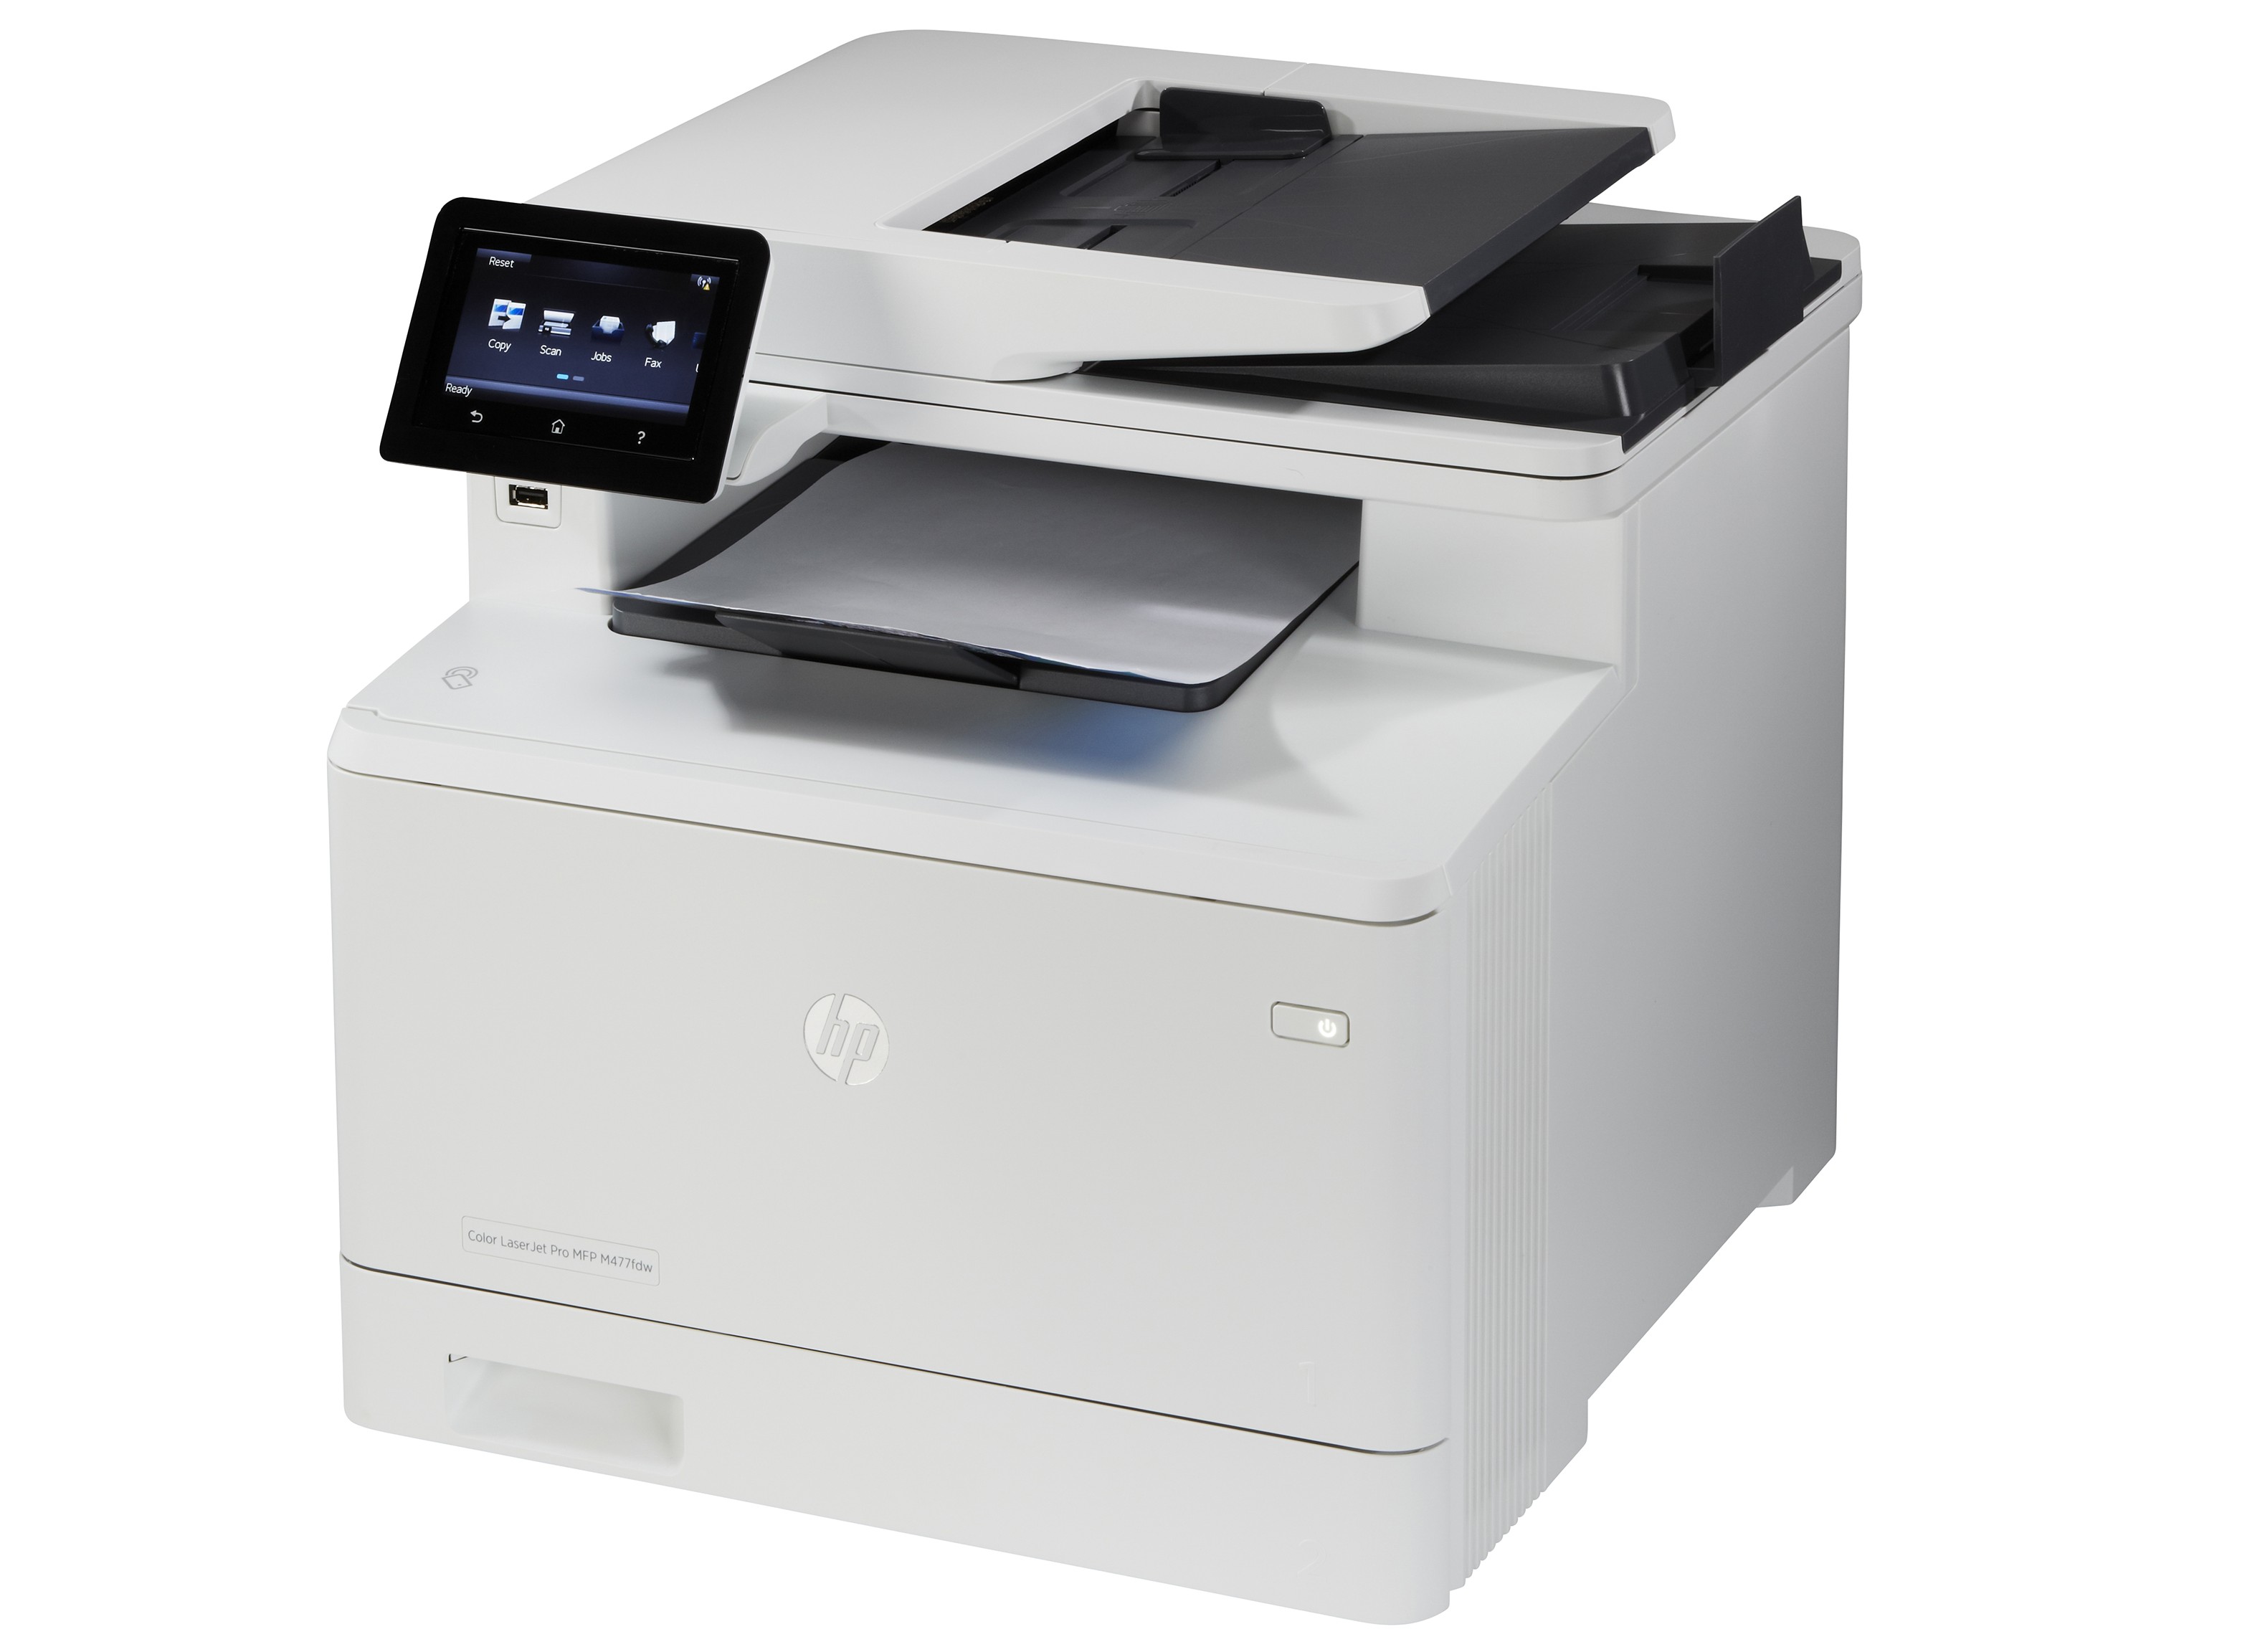 HP LaserJet Pro M477FDW Printer Review - Consumer Reports